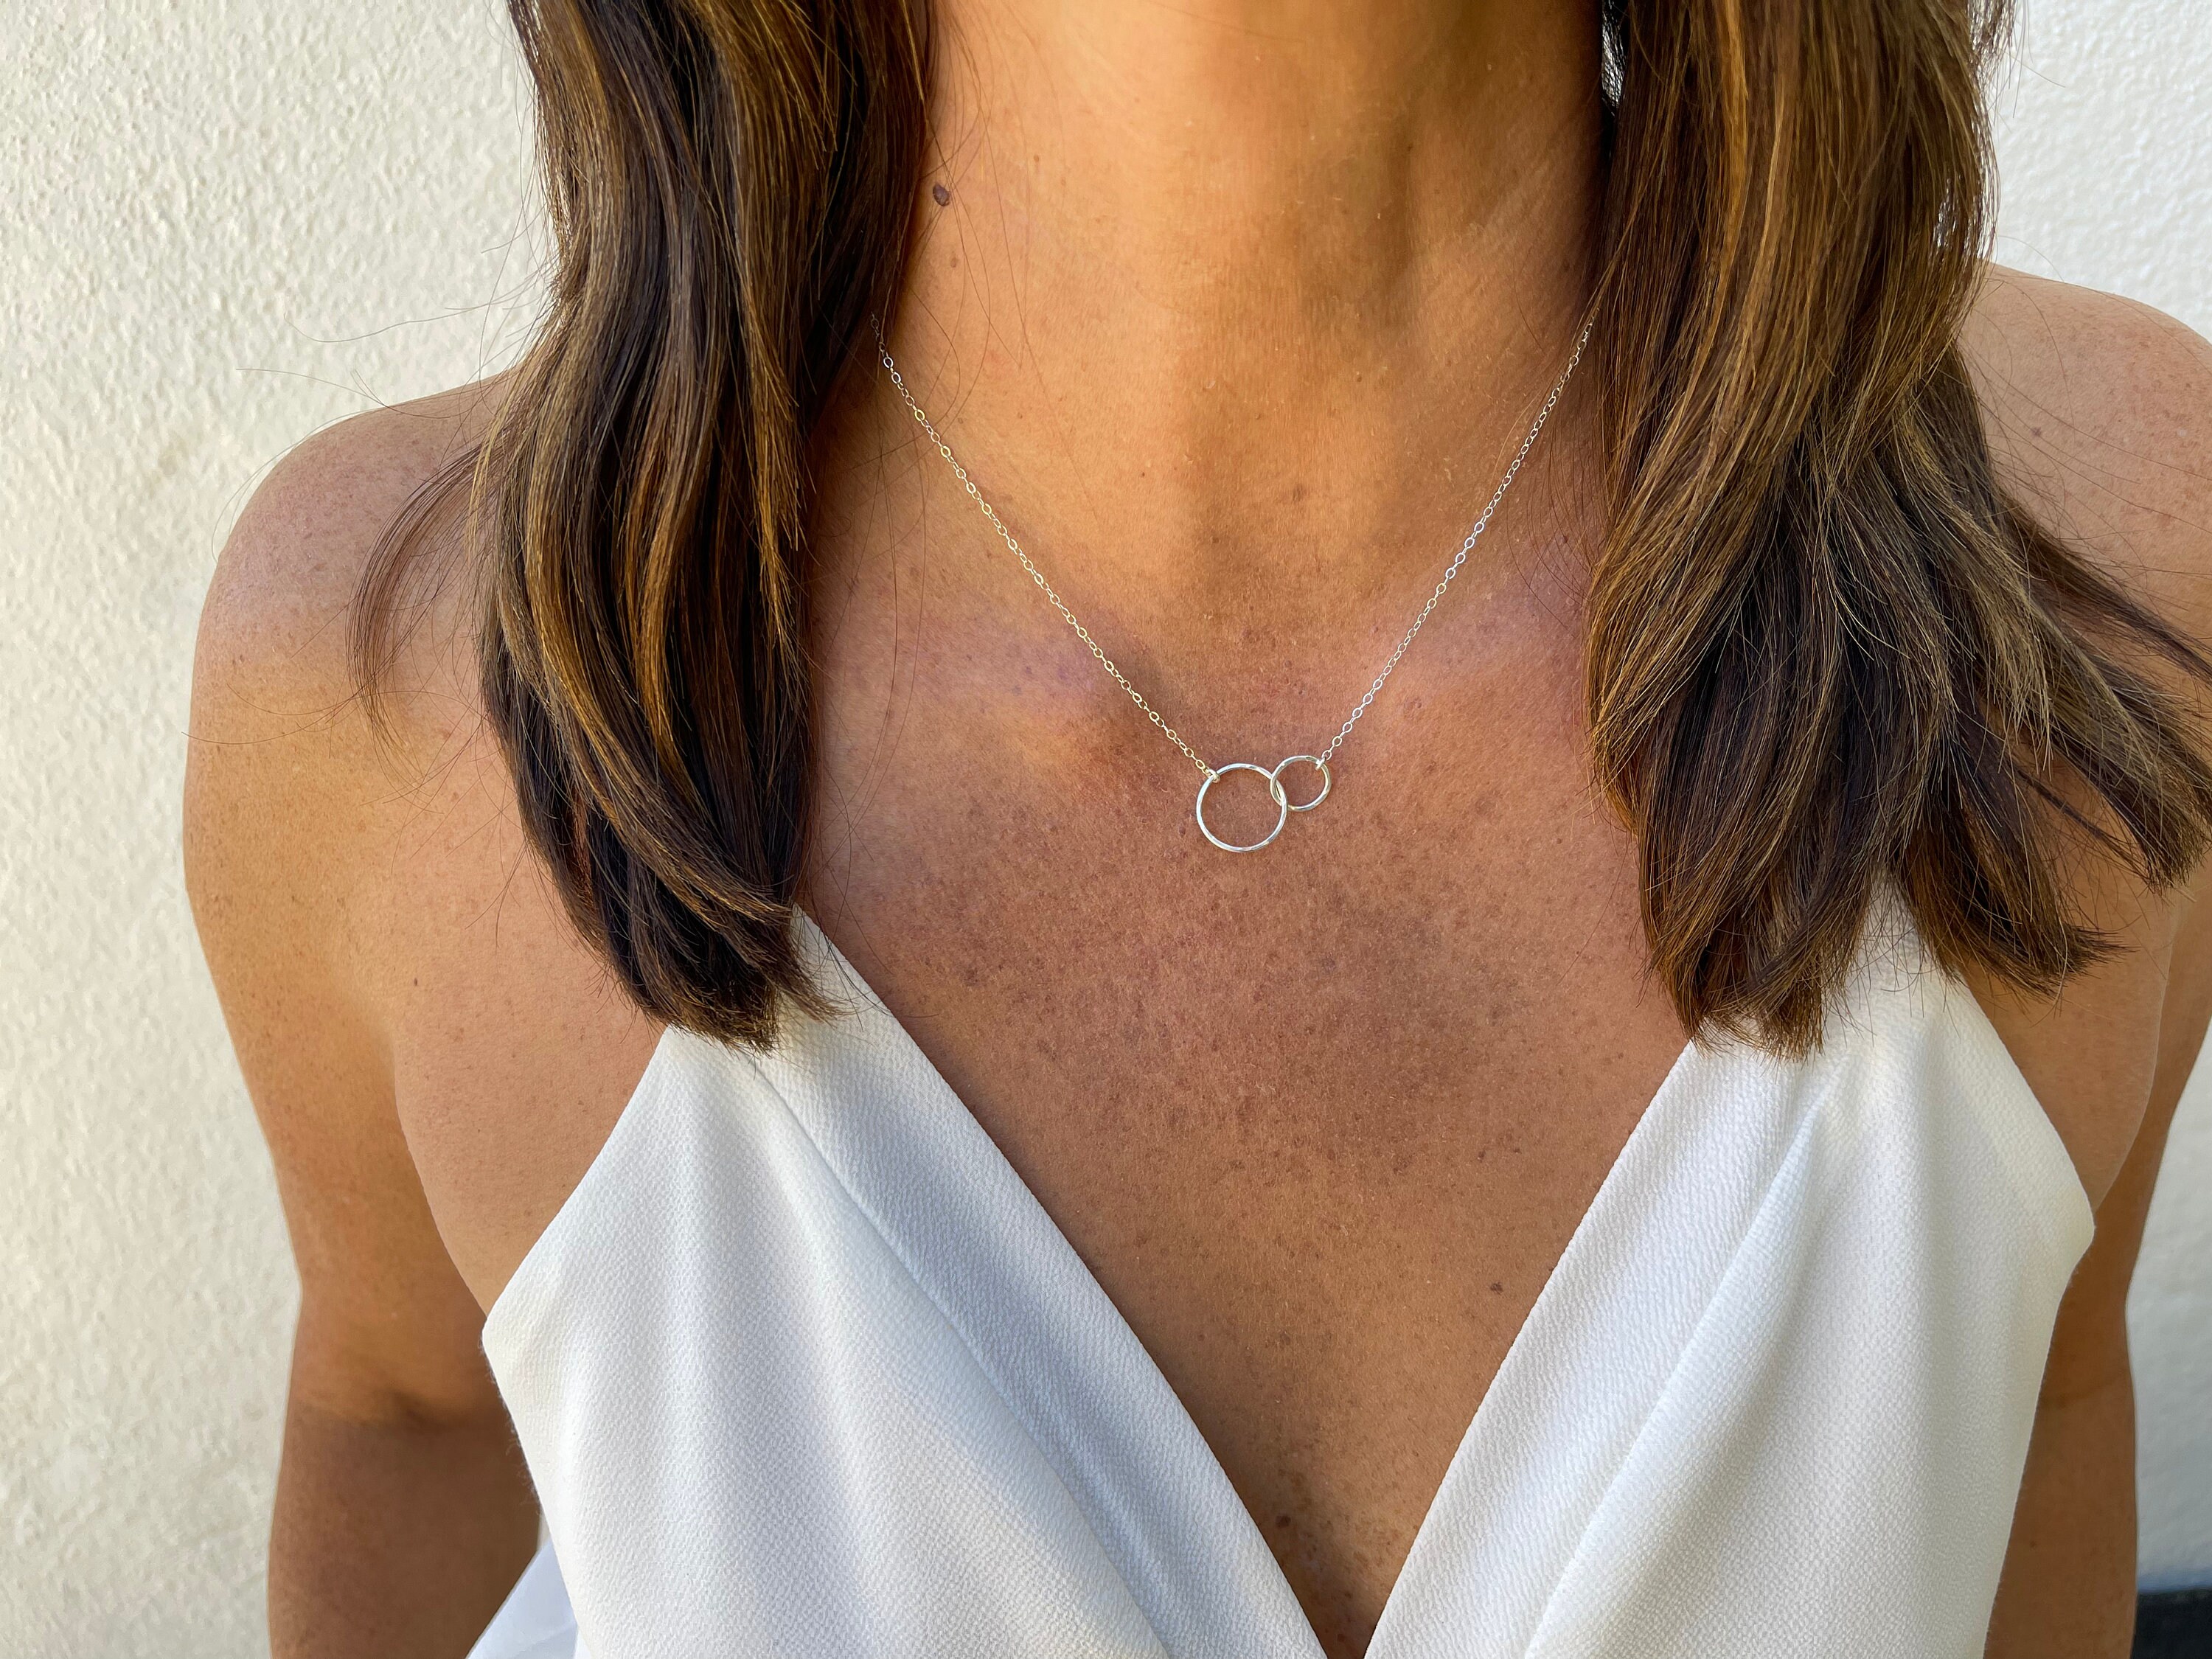 Interlocking Silver Circles Necklace